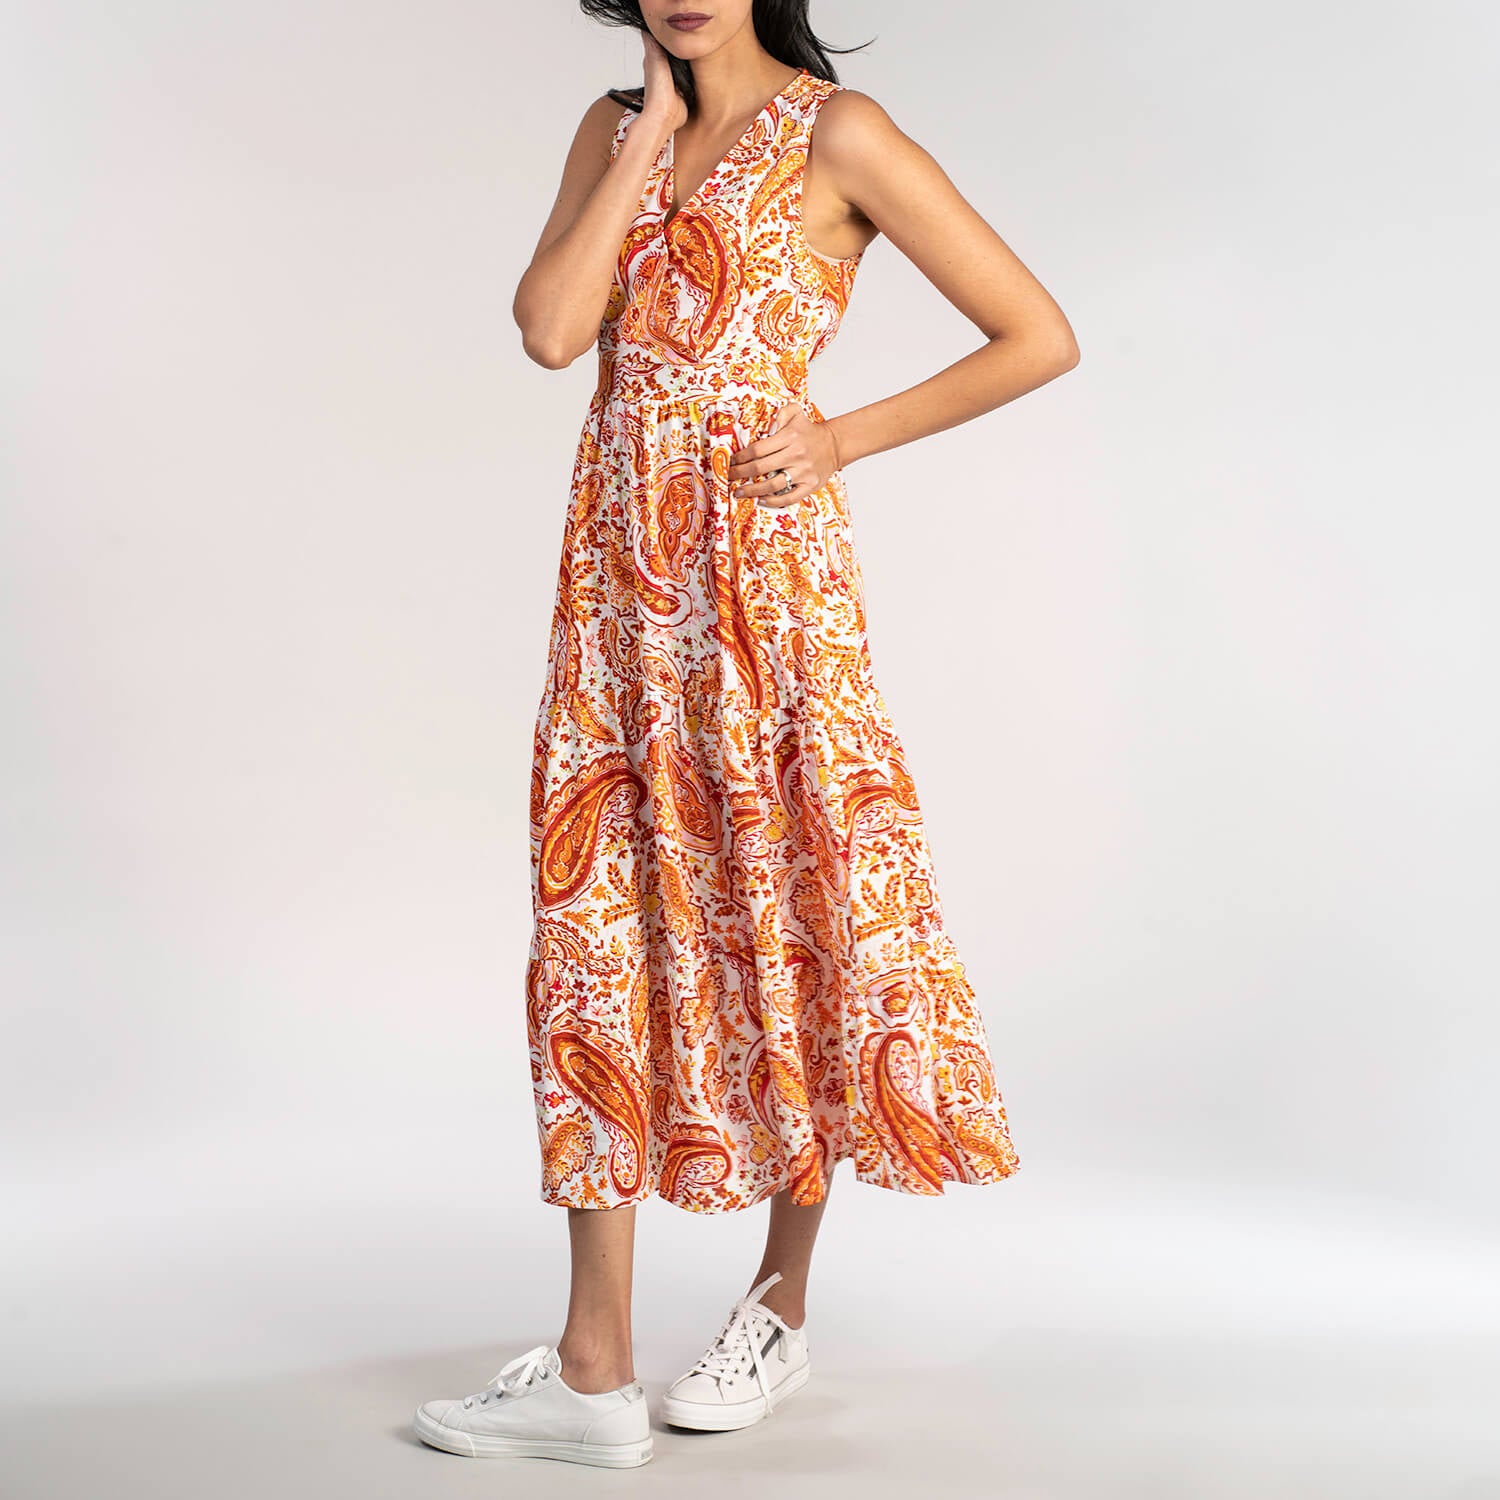 Naoise V Neck Sleeveless Dress - Coral 1 Shaws Department Stores